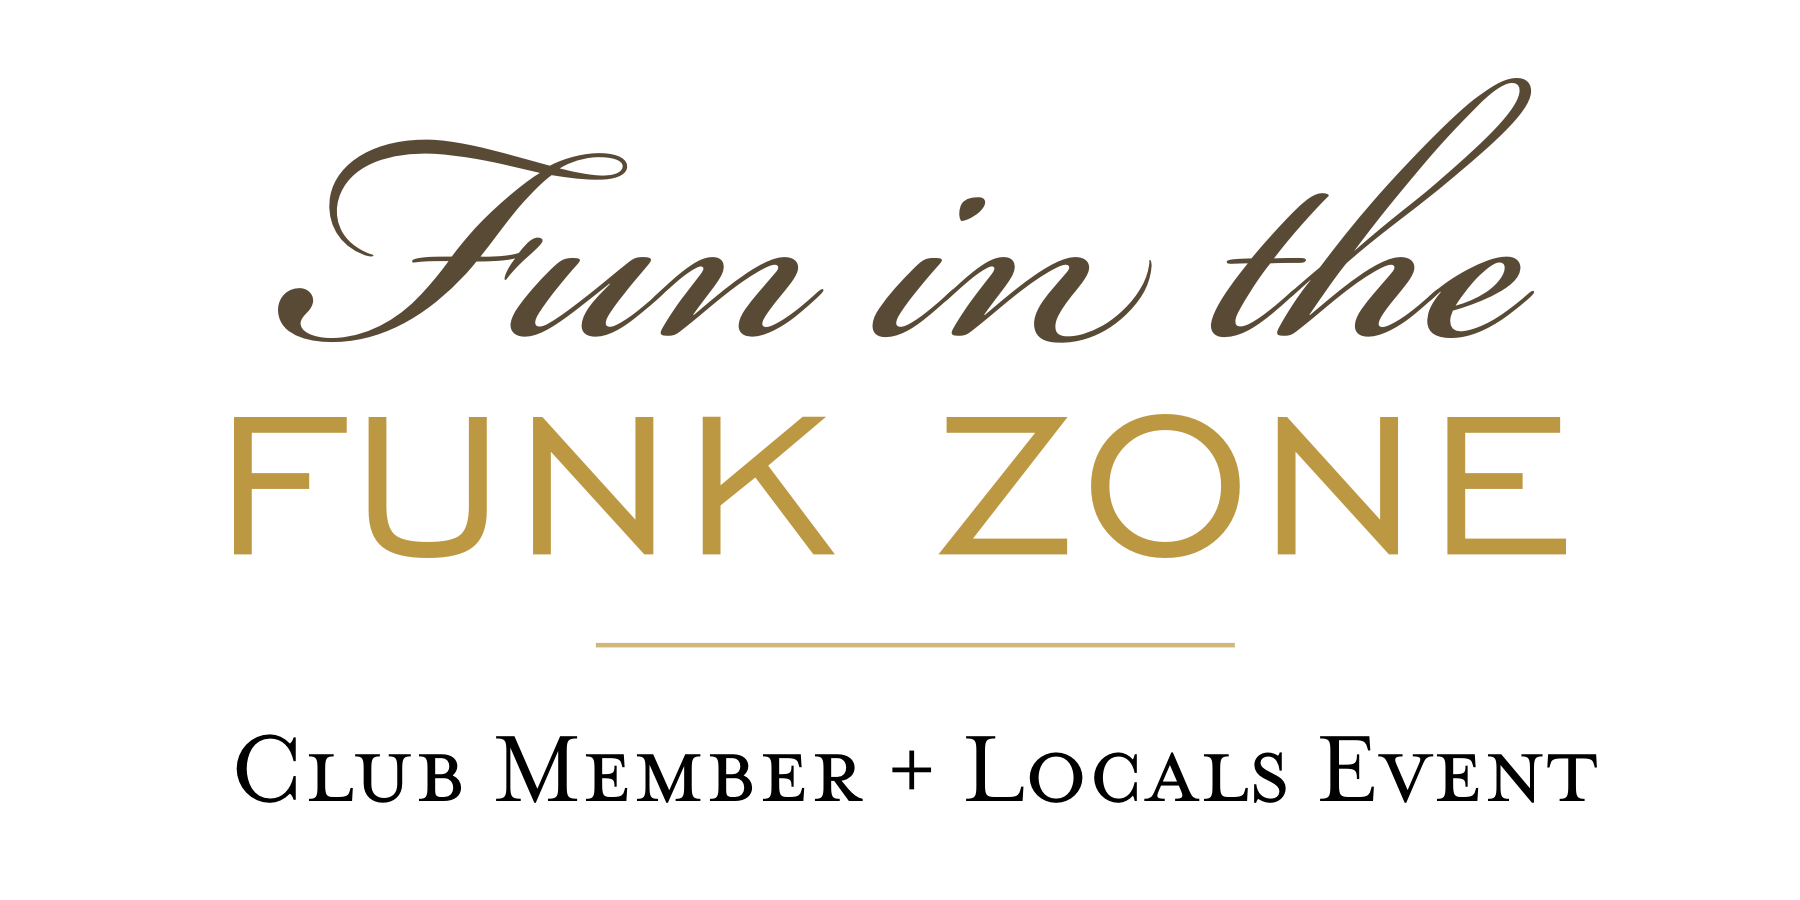 Fun in the Funk Zone